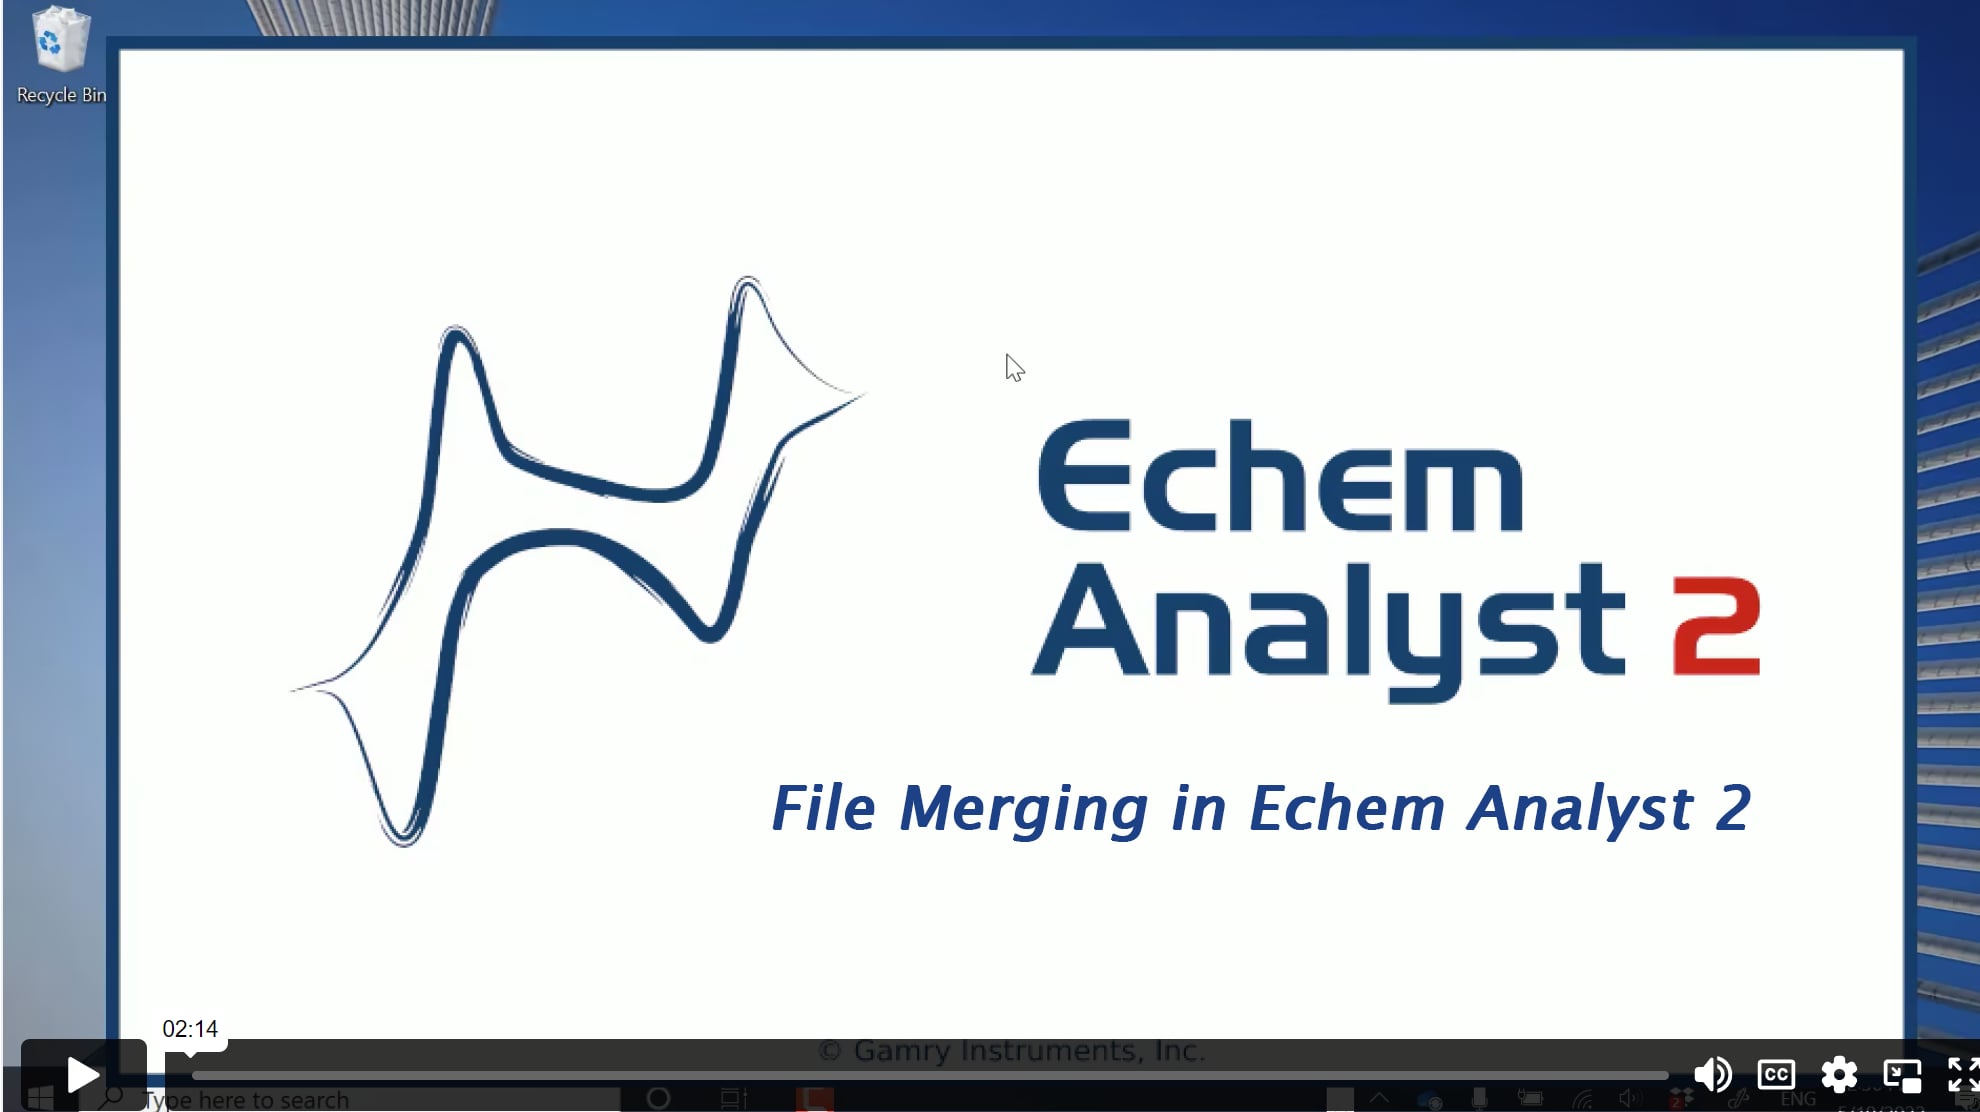 File Merging in Echem Analyst 2